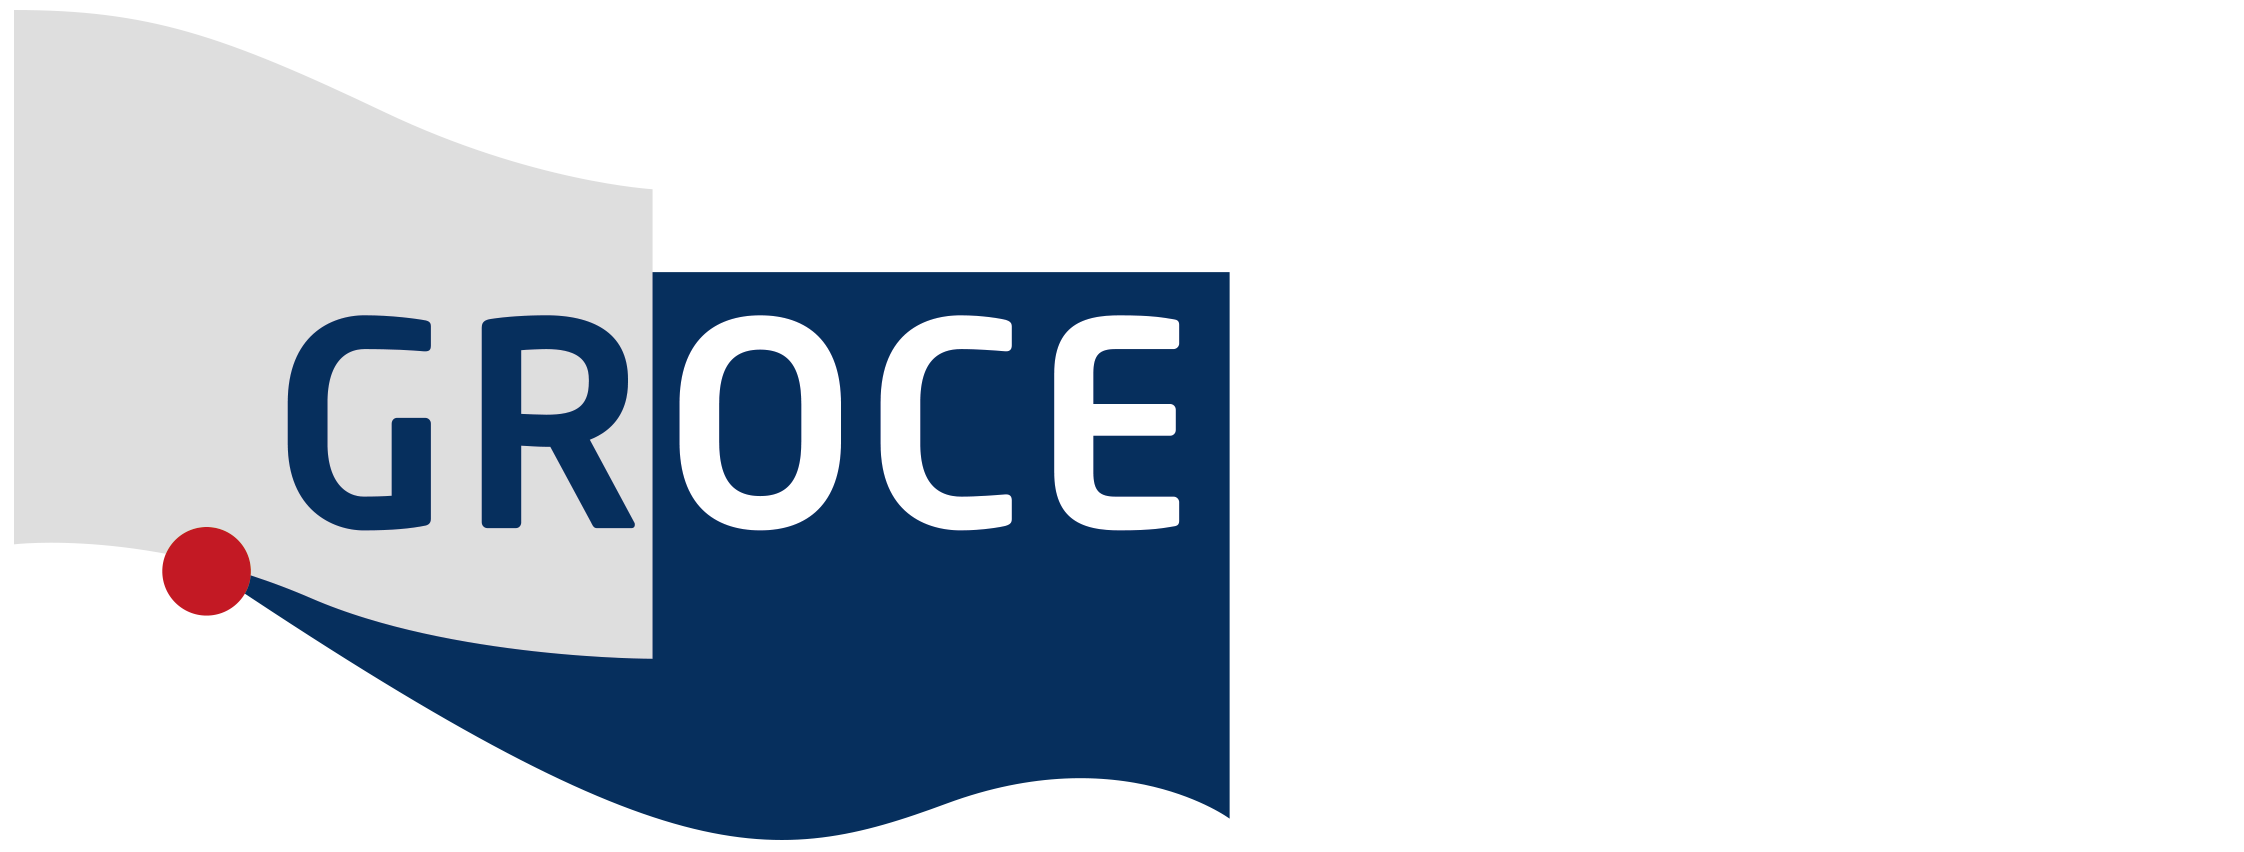 GROCE Logo